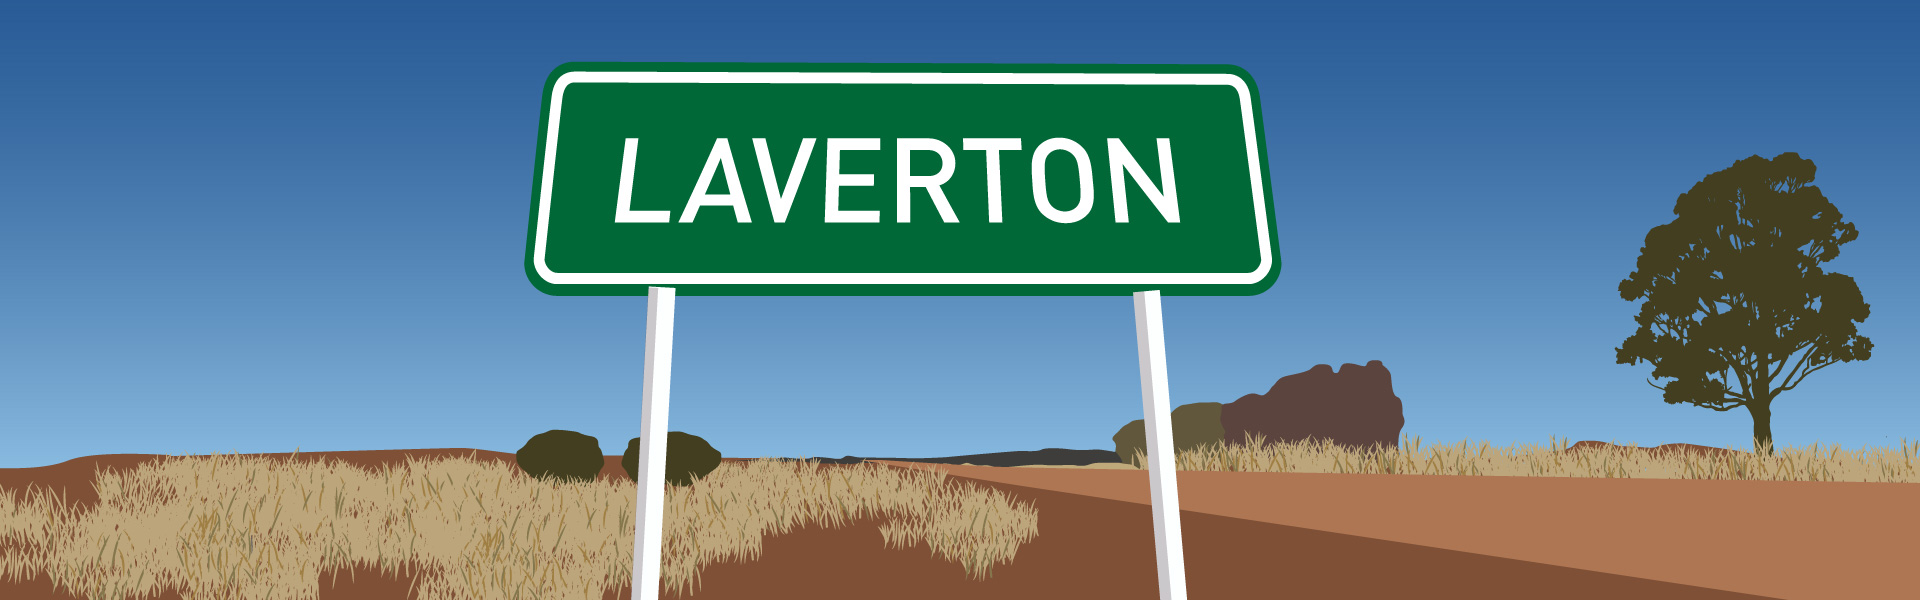 Laverton Town Sign